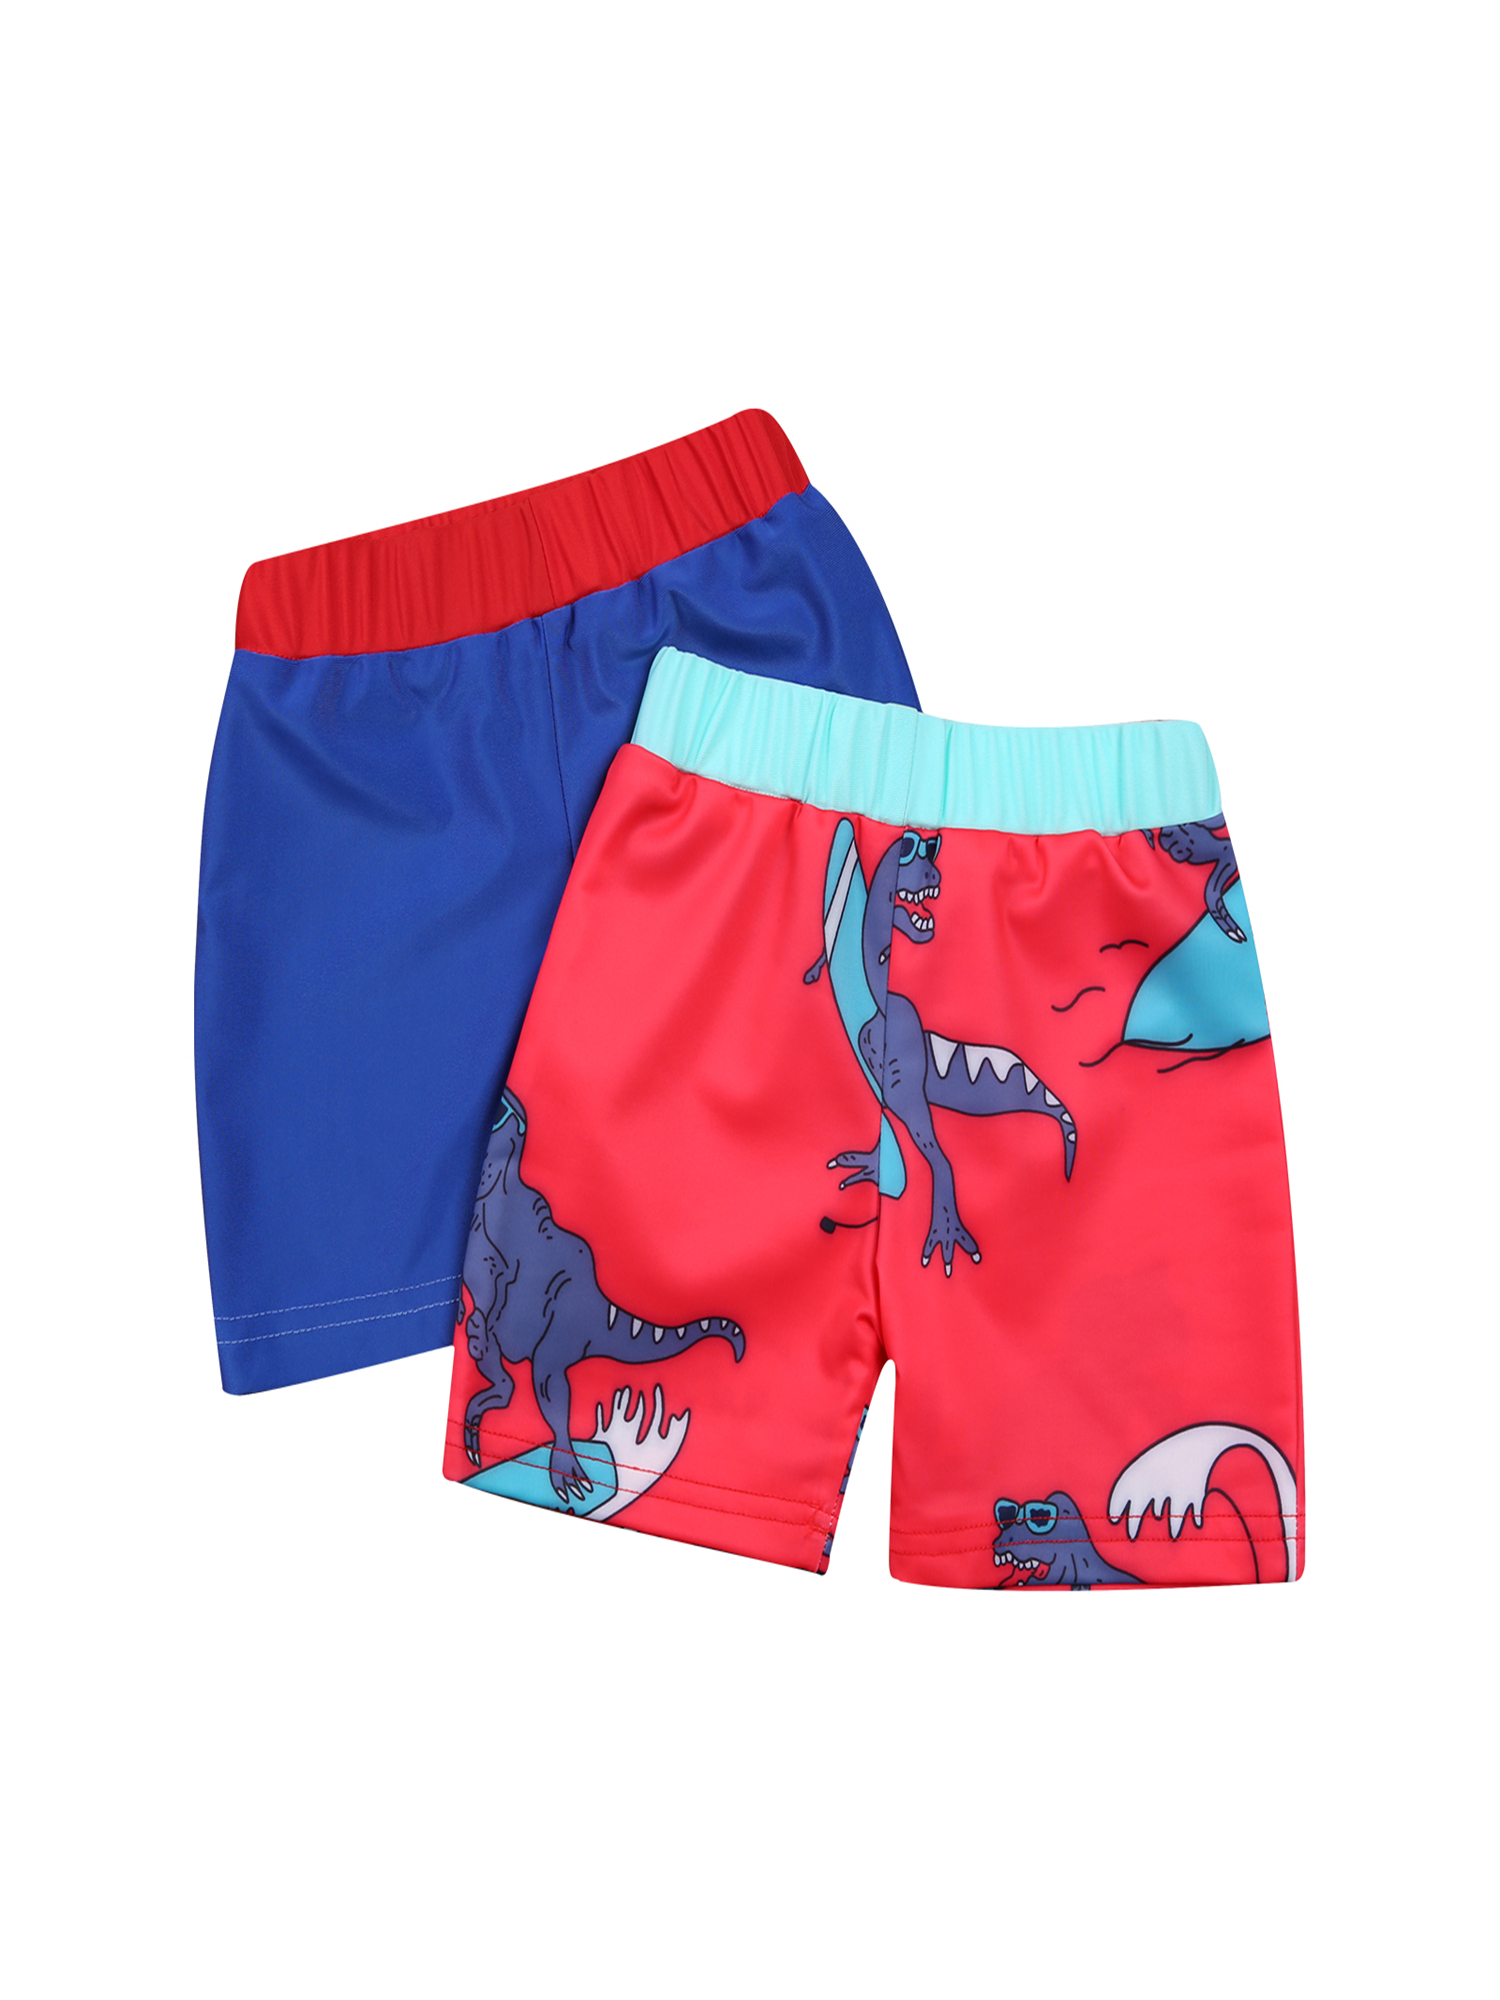 Binwwede Boys Swimwear Trunks Fish Printed Swim Shorts Toddler Baby Little Boy Summer Beach Swimsuits - image 4 of 6